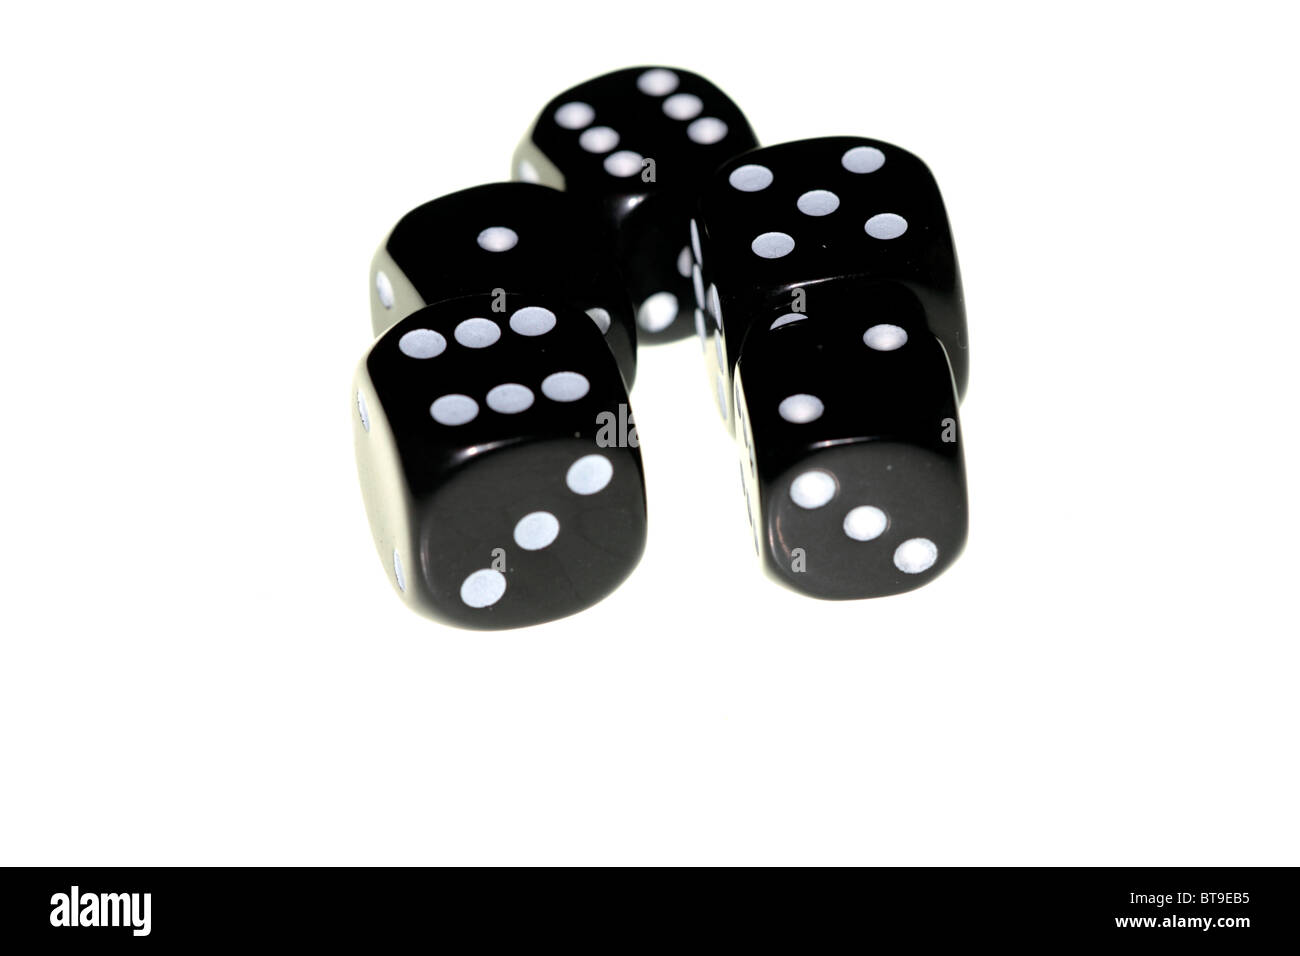 Five black dice randomly arranged on a white background Stock Photo